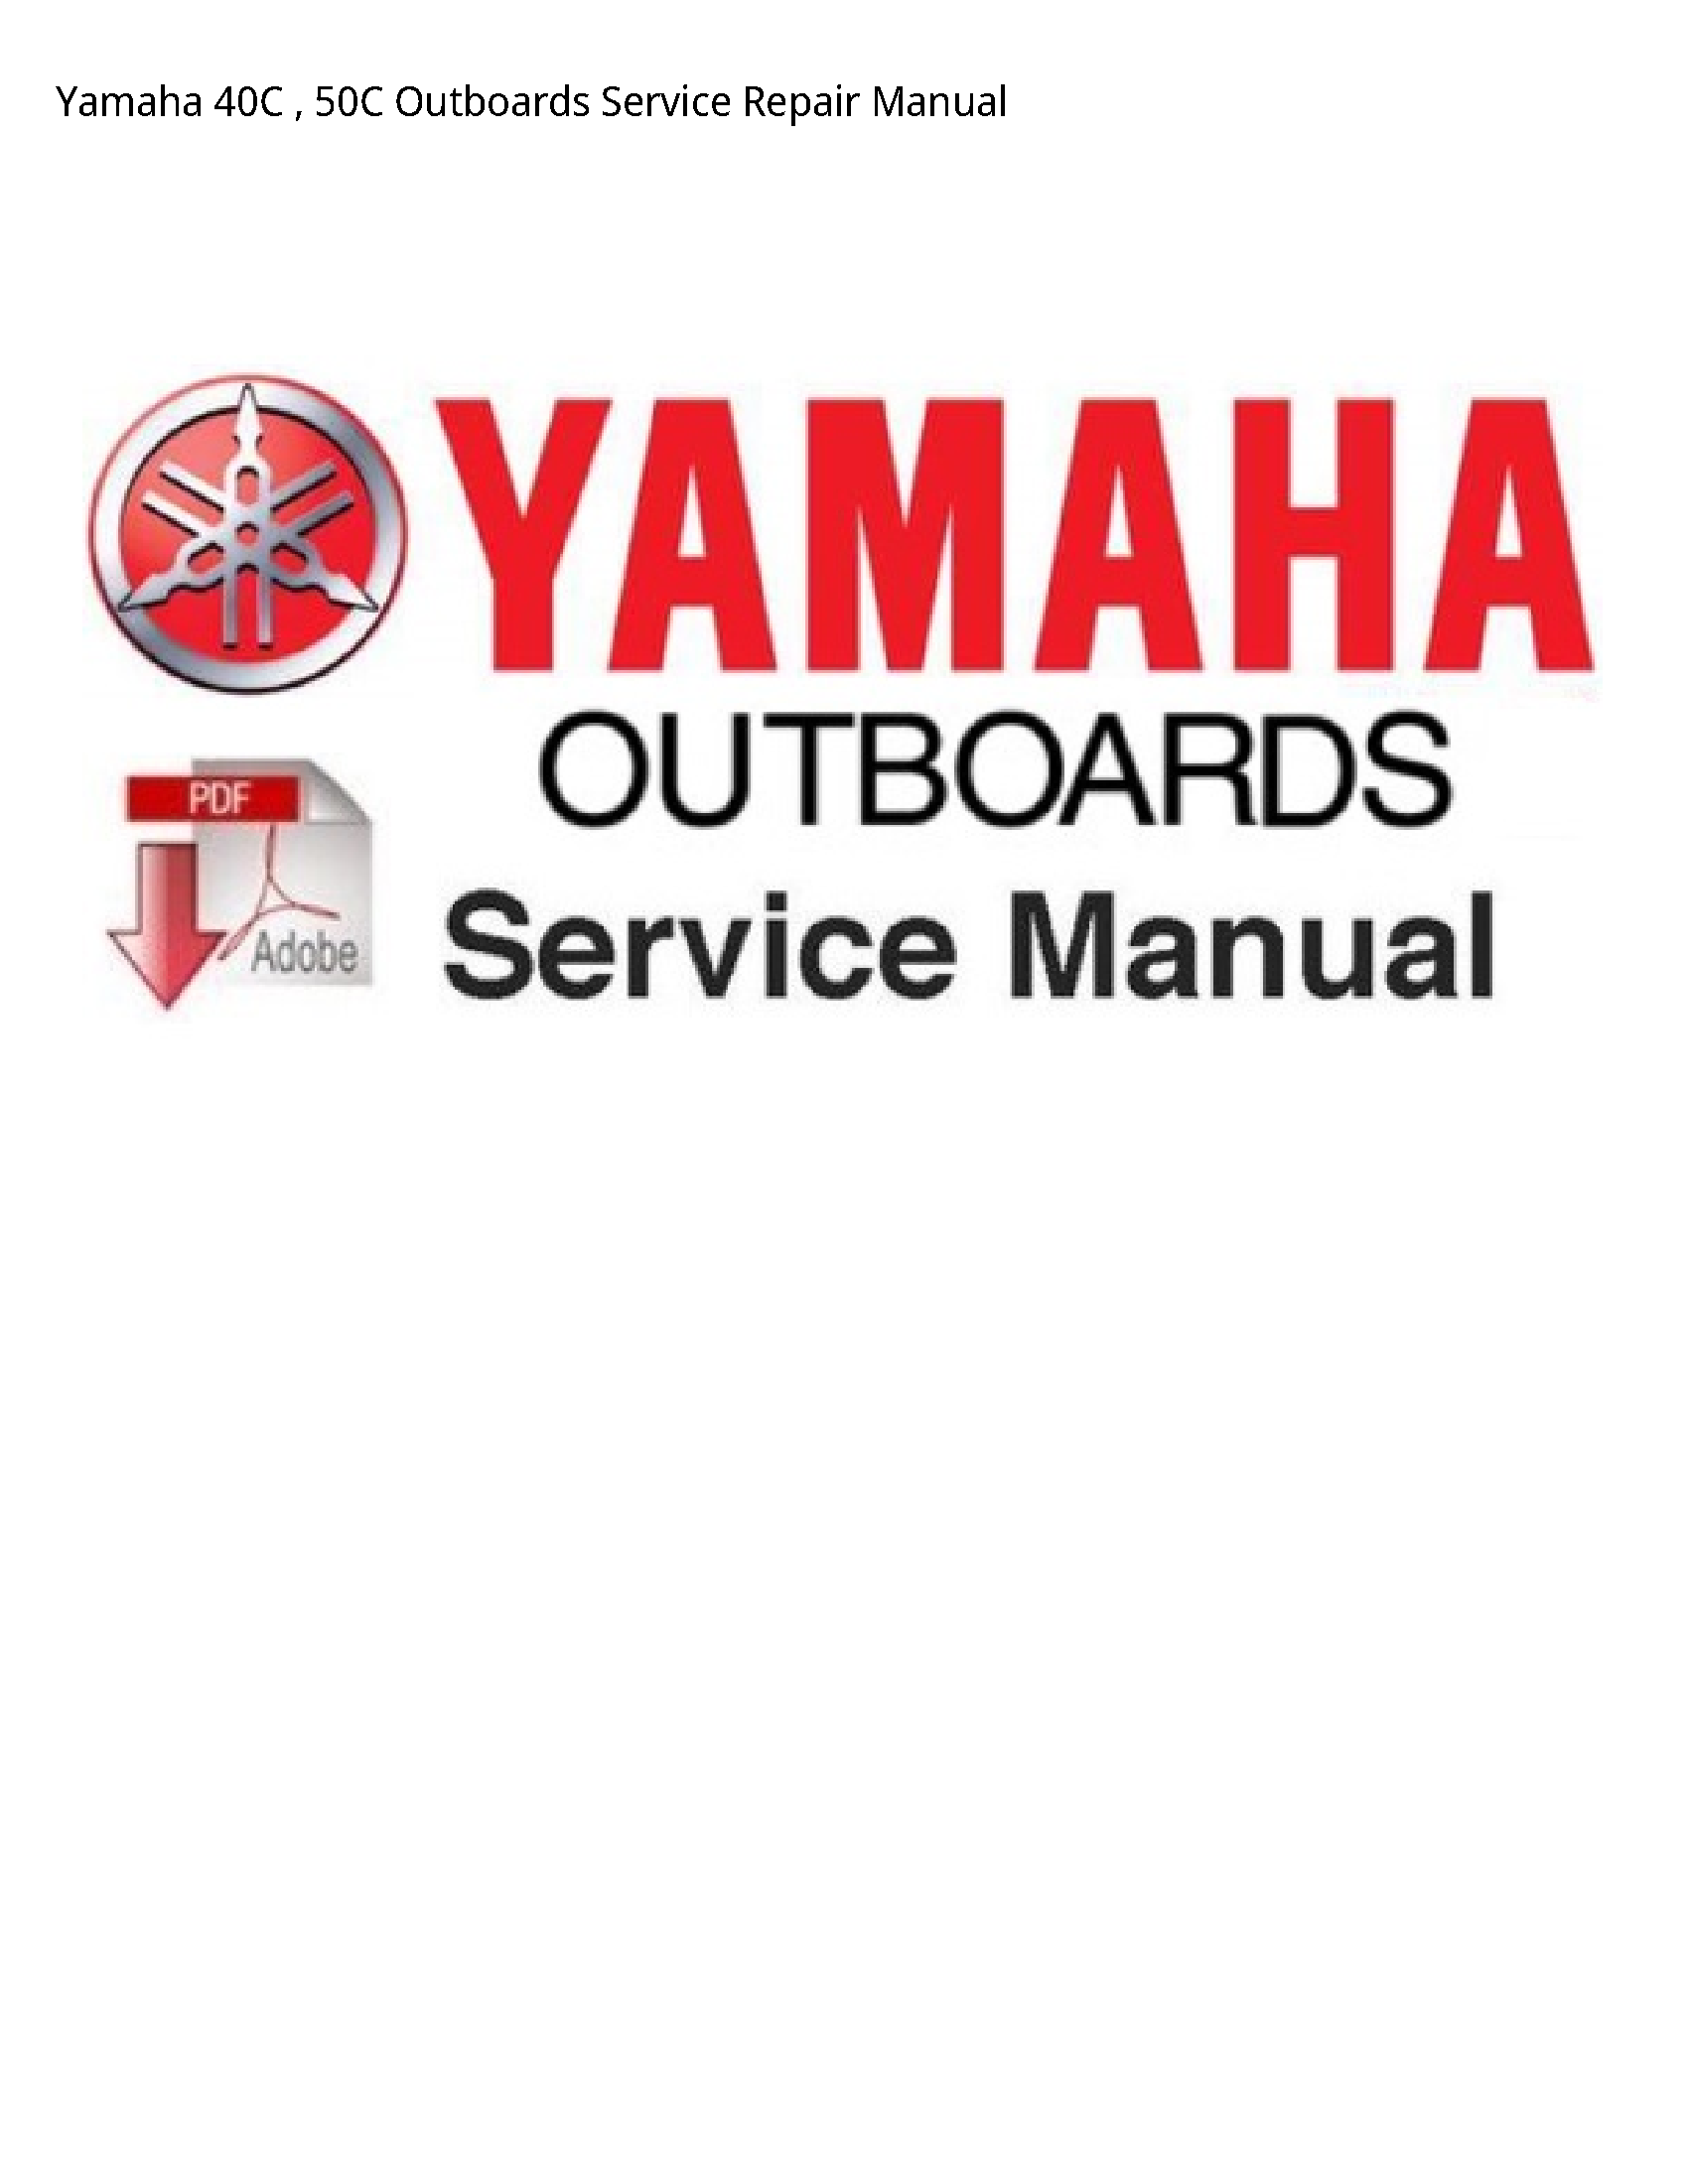 Yamaha 40C Outboards manual